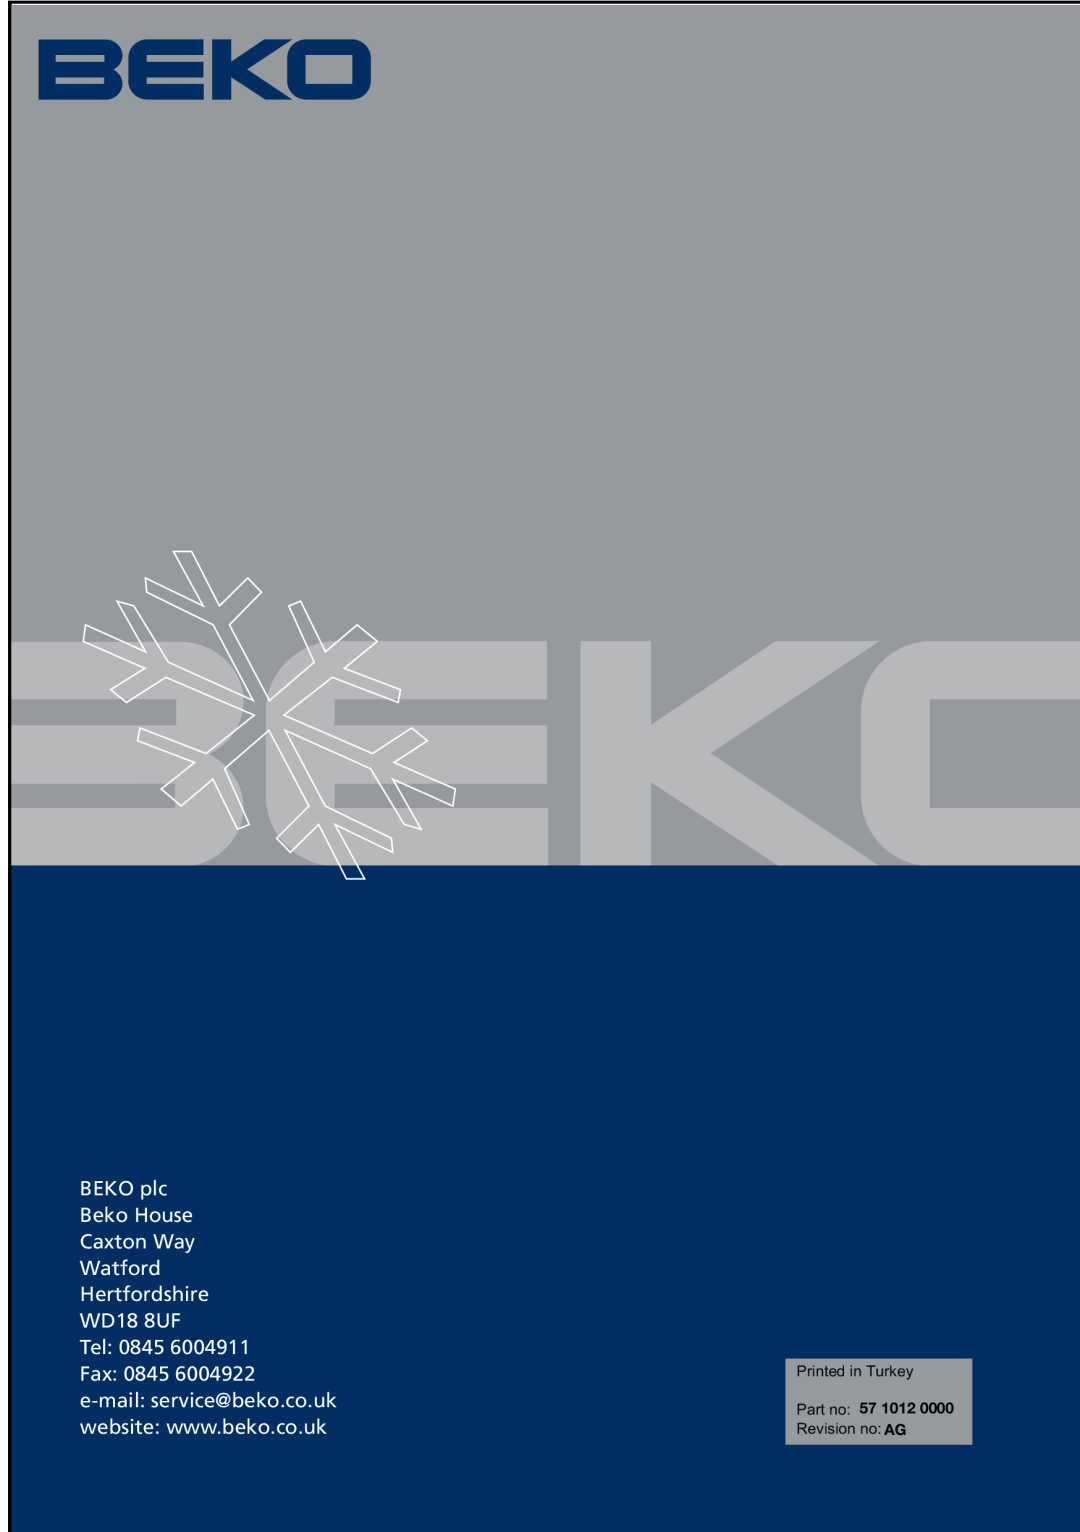 Beko UR584APS BEKO plc Beko House Caxton Way Watford Hertfordshire WD18 8UF, Tel 0845 Fax 0845 e-mail service@beko.co.uk 